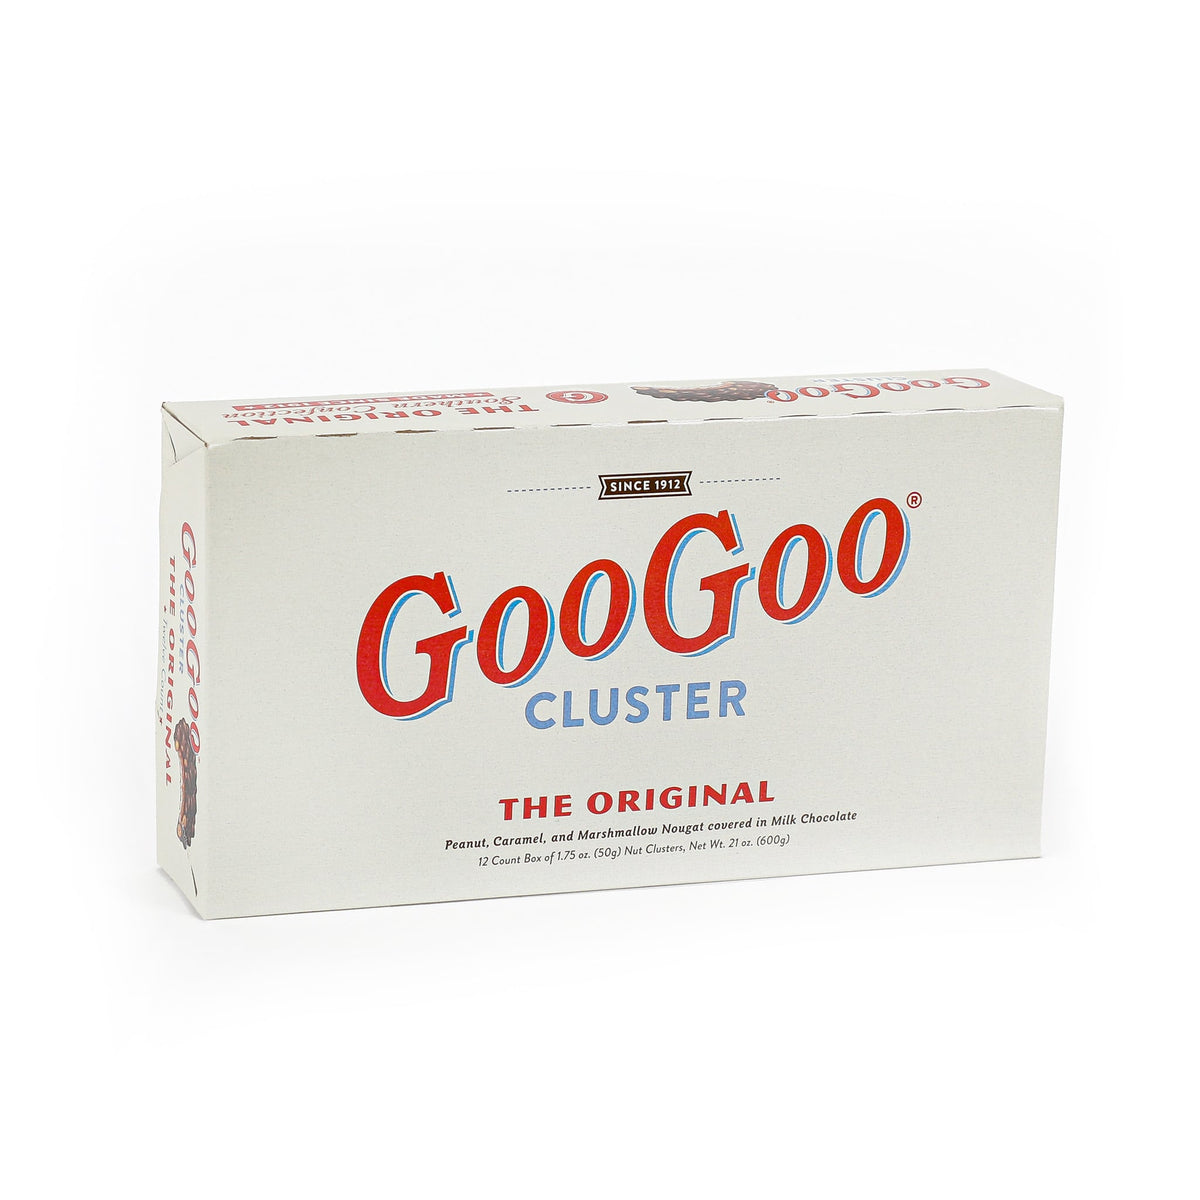 A Brief History Of Goo Goo Clusters